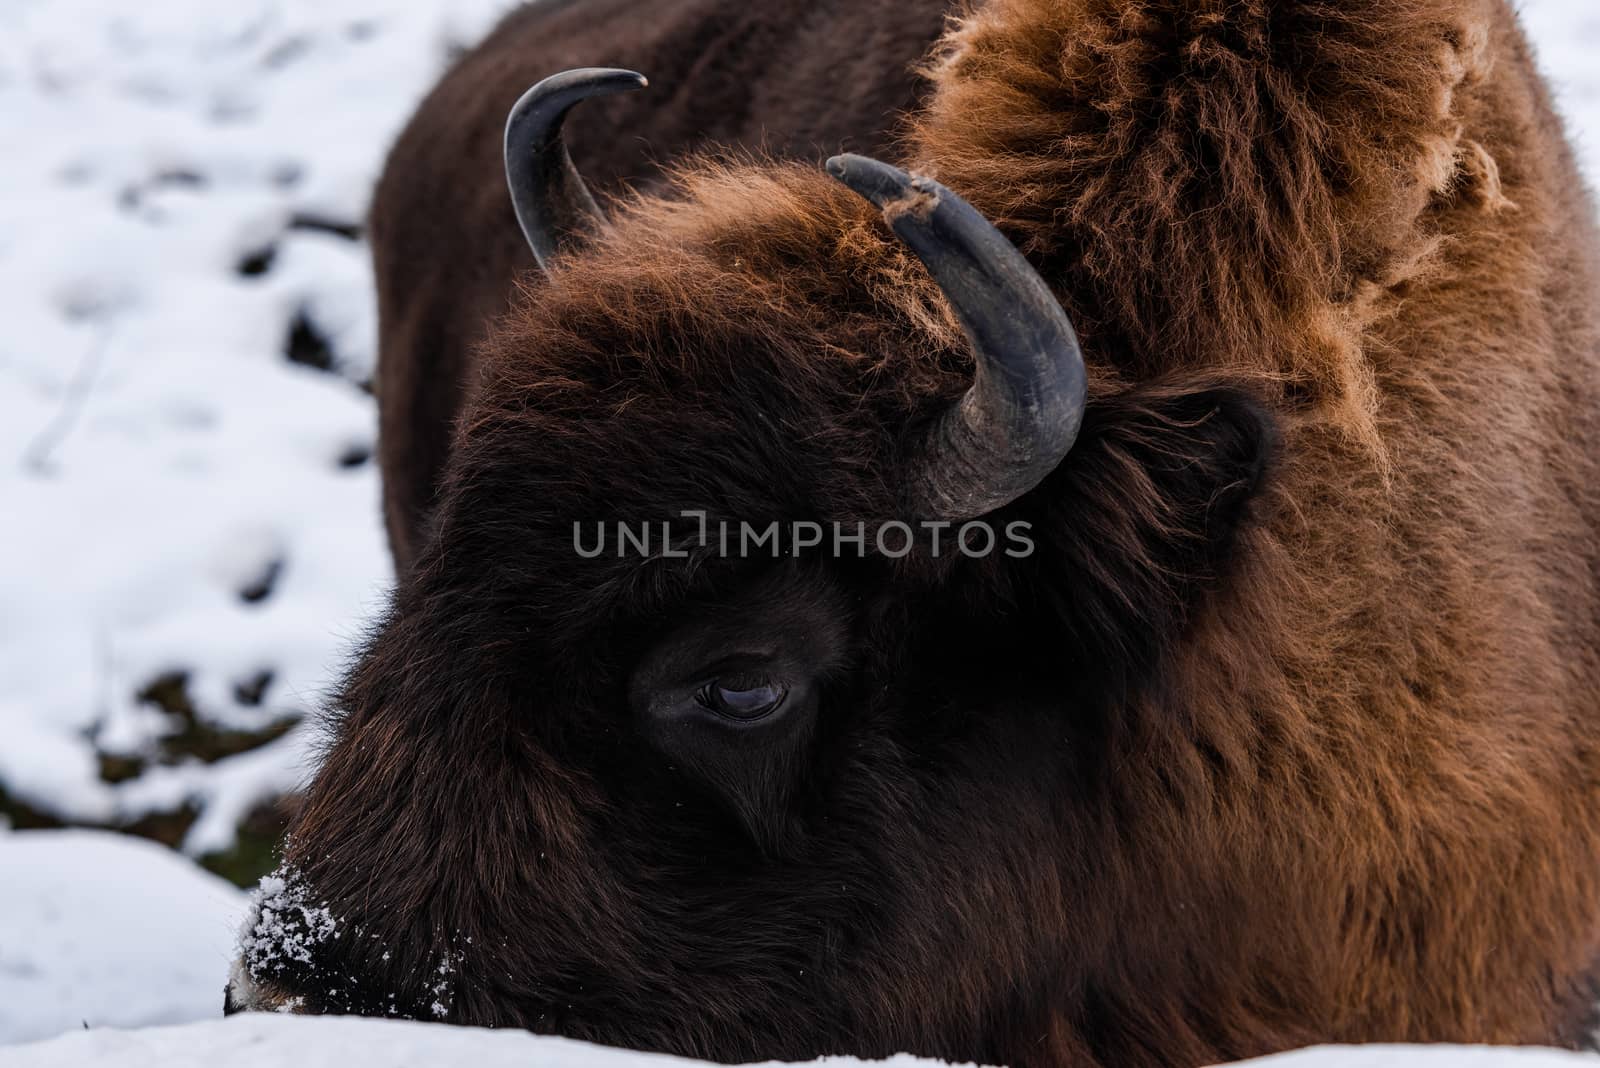 European bison (Bison bonasus) Close Up Portrait at Winter Seaso by merc67